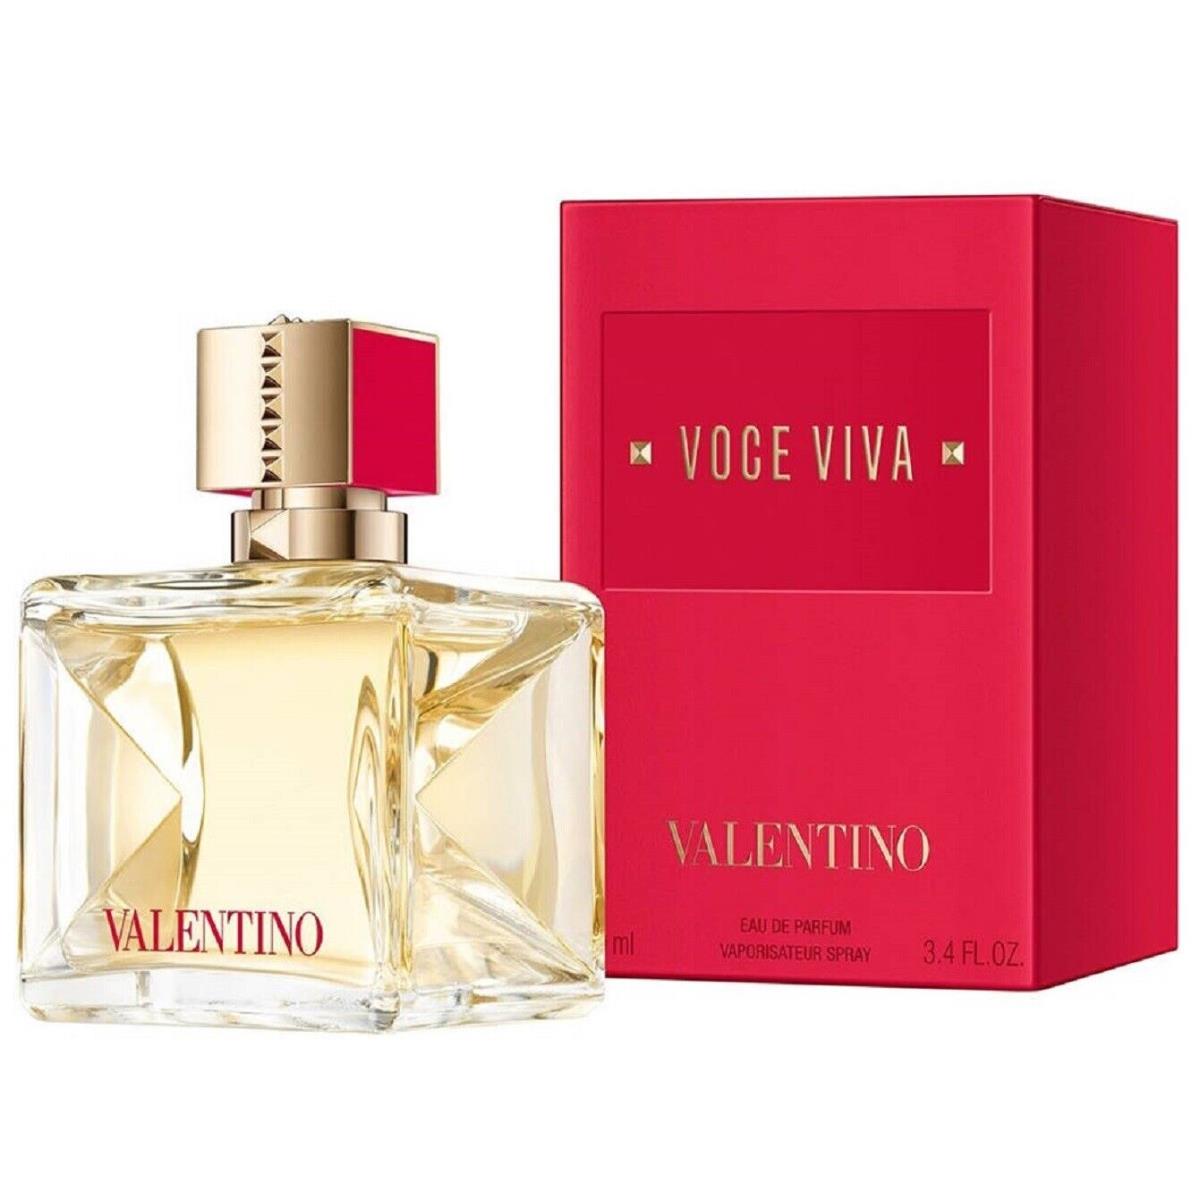 Voce Viva Valentino 3.4 oz / 100 ml Eau de Parfum Edp Women Perfume Spray